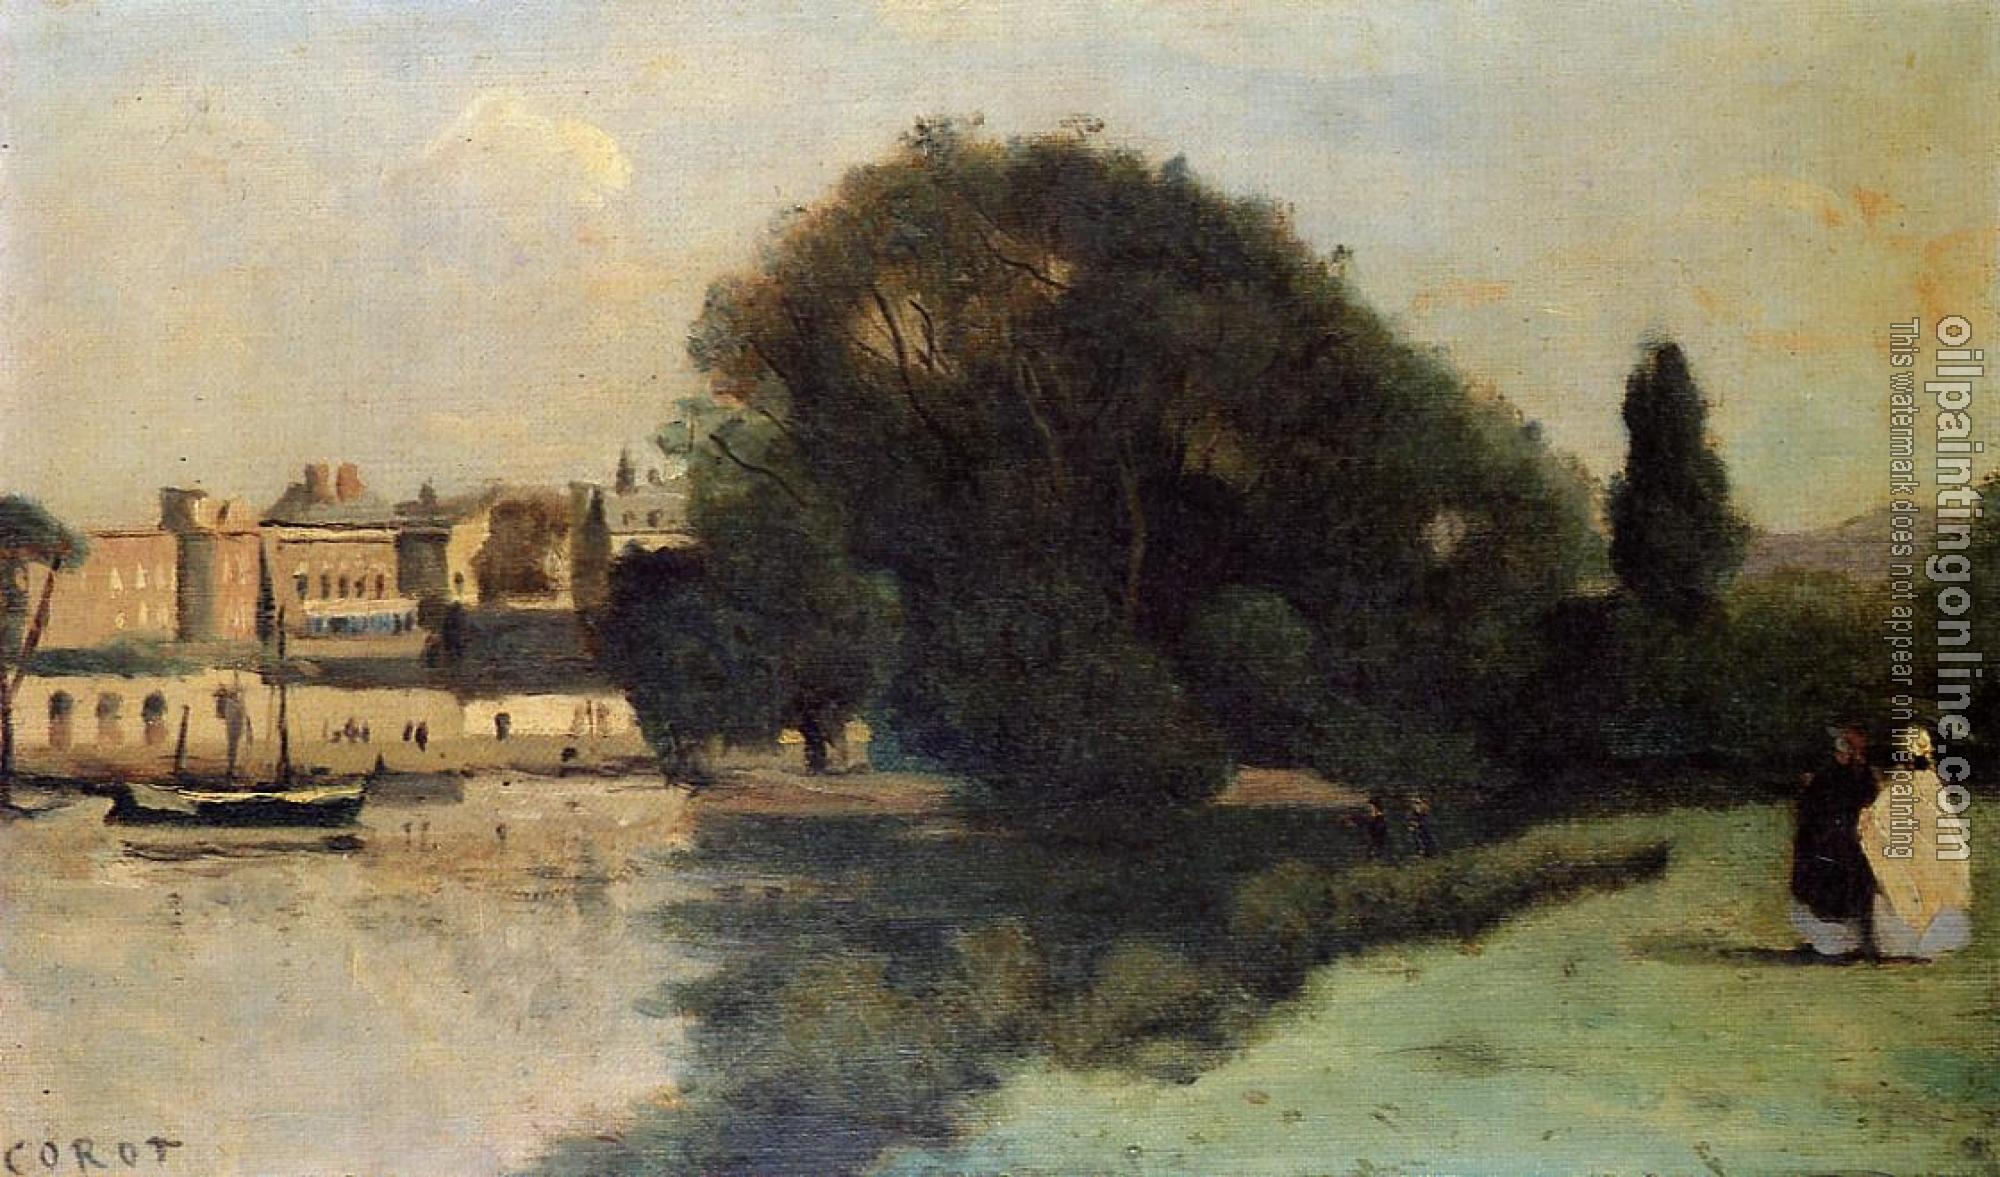 Corot, Jean-Baptiste-Camille - Richmond, near London